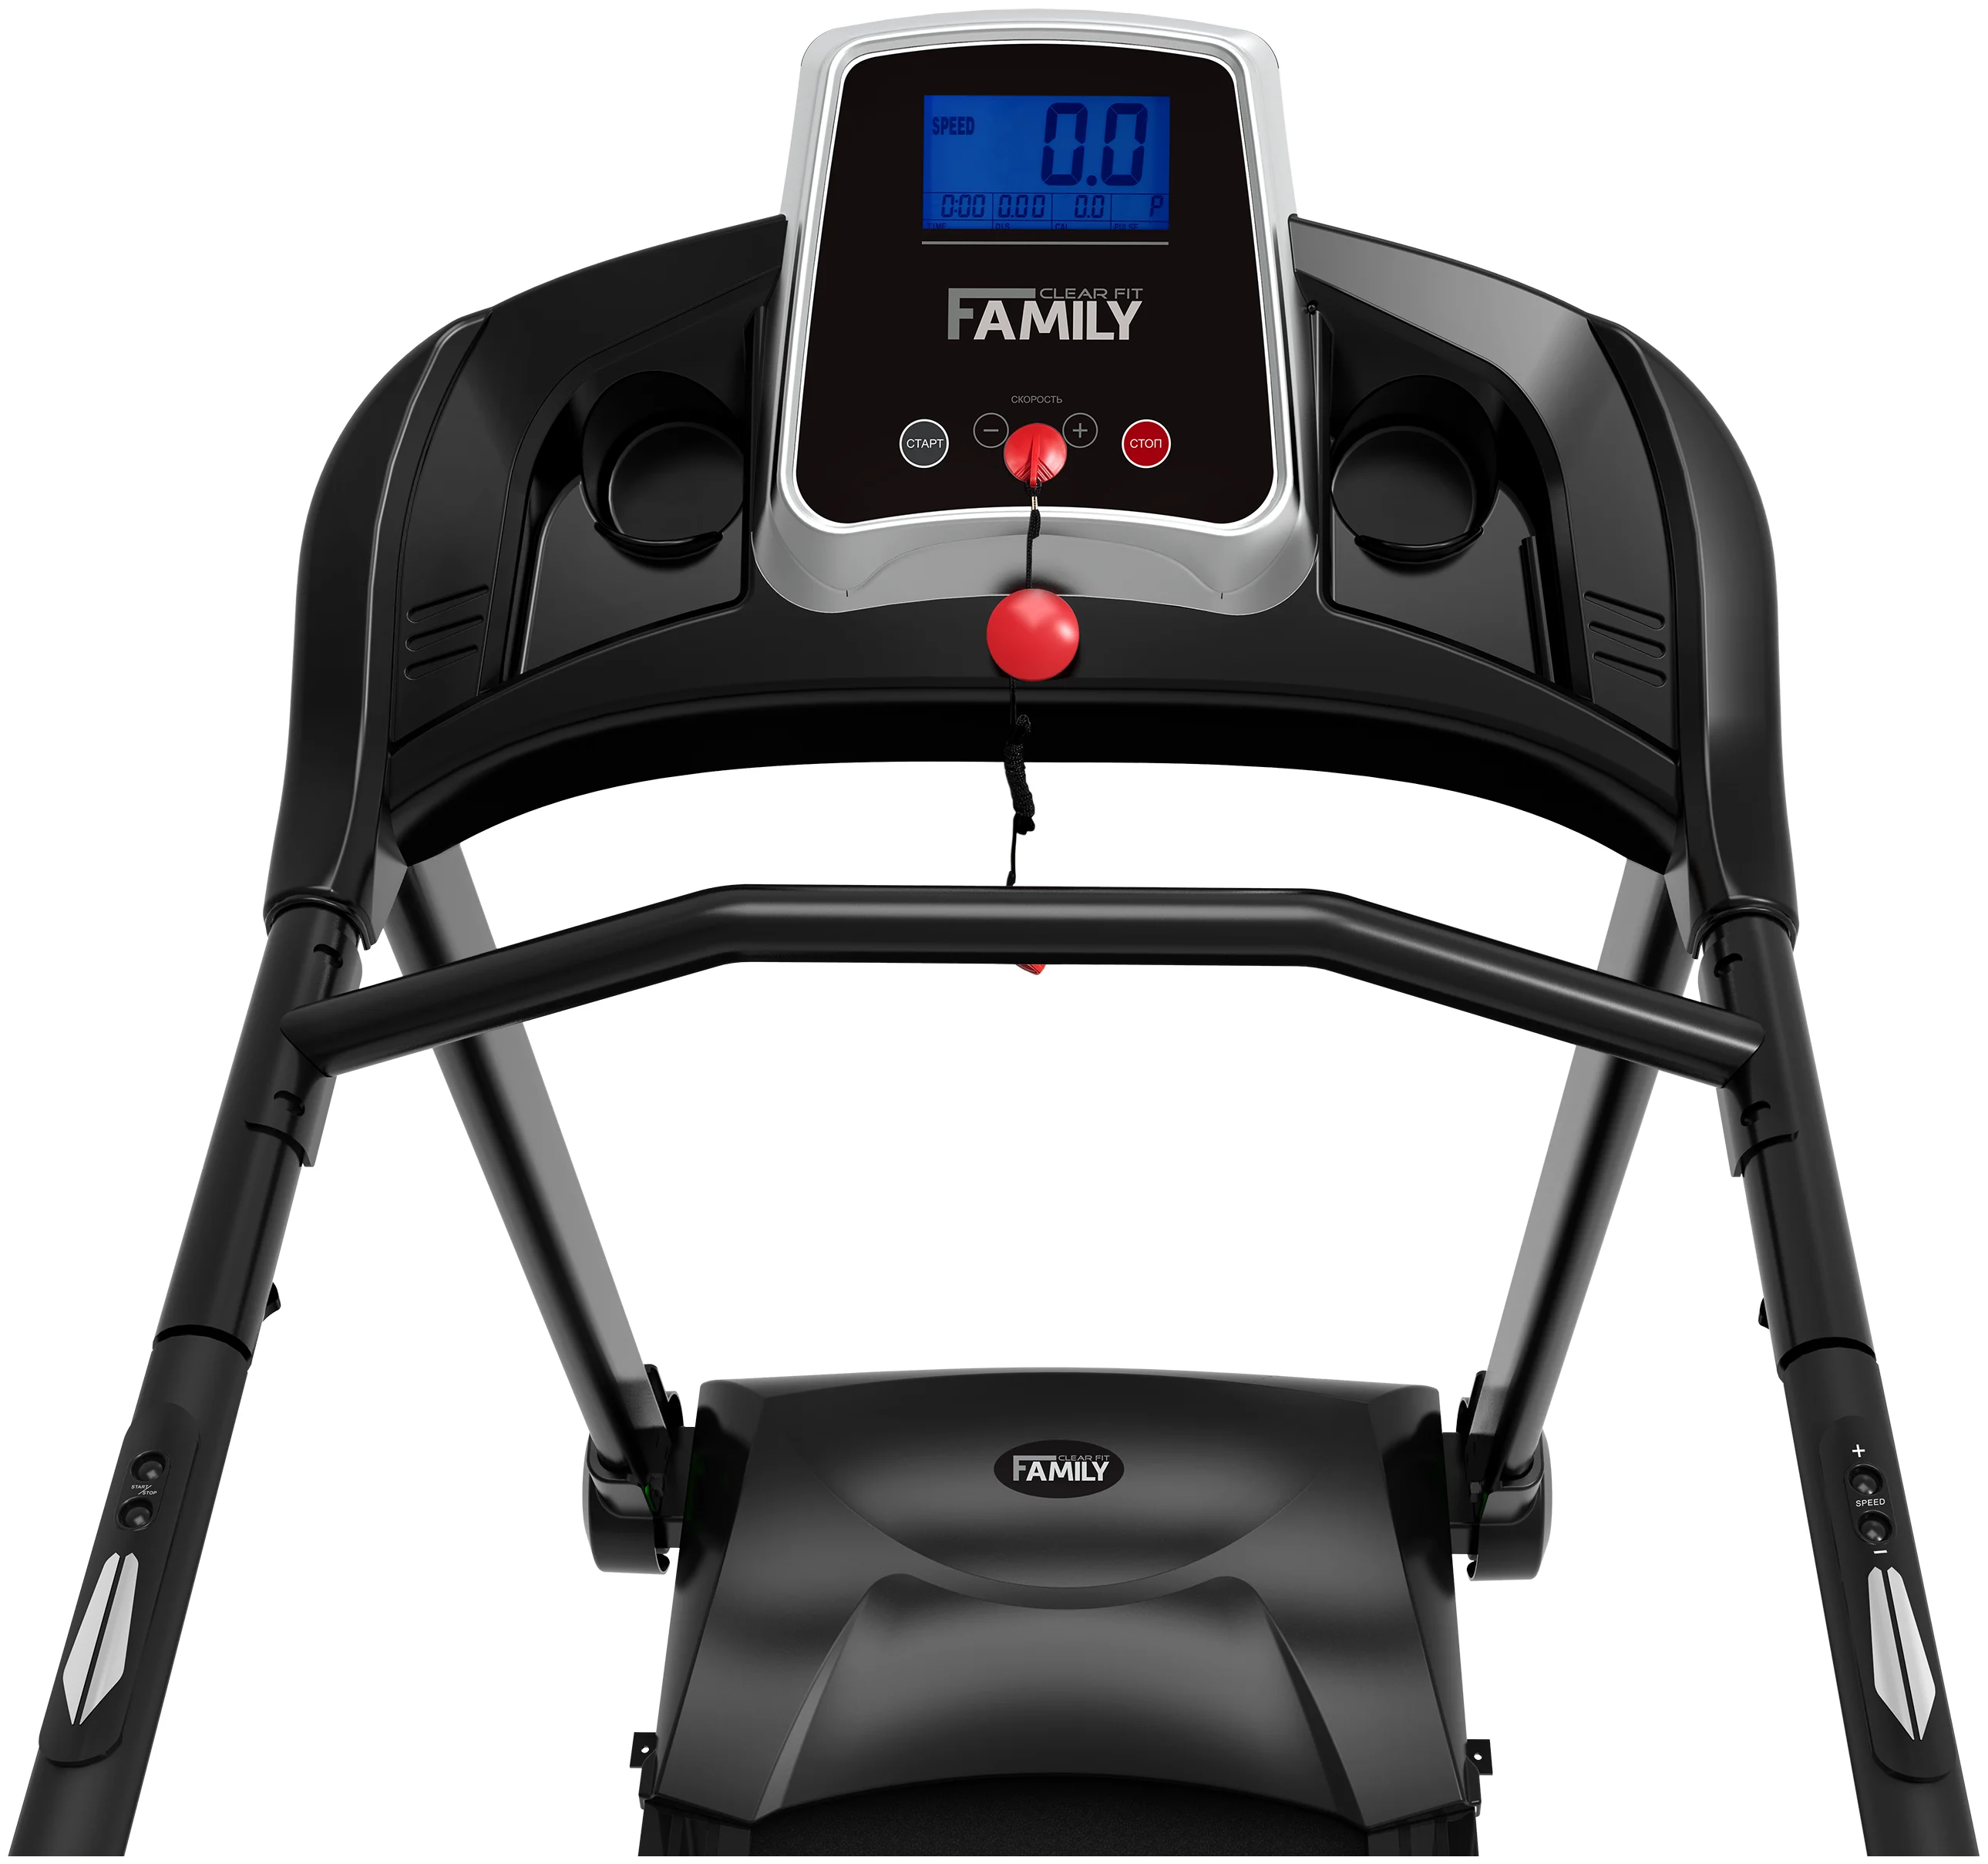 FAMILY TM 250R - вес пользователя до 100 кг